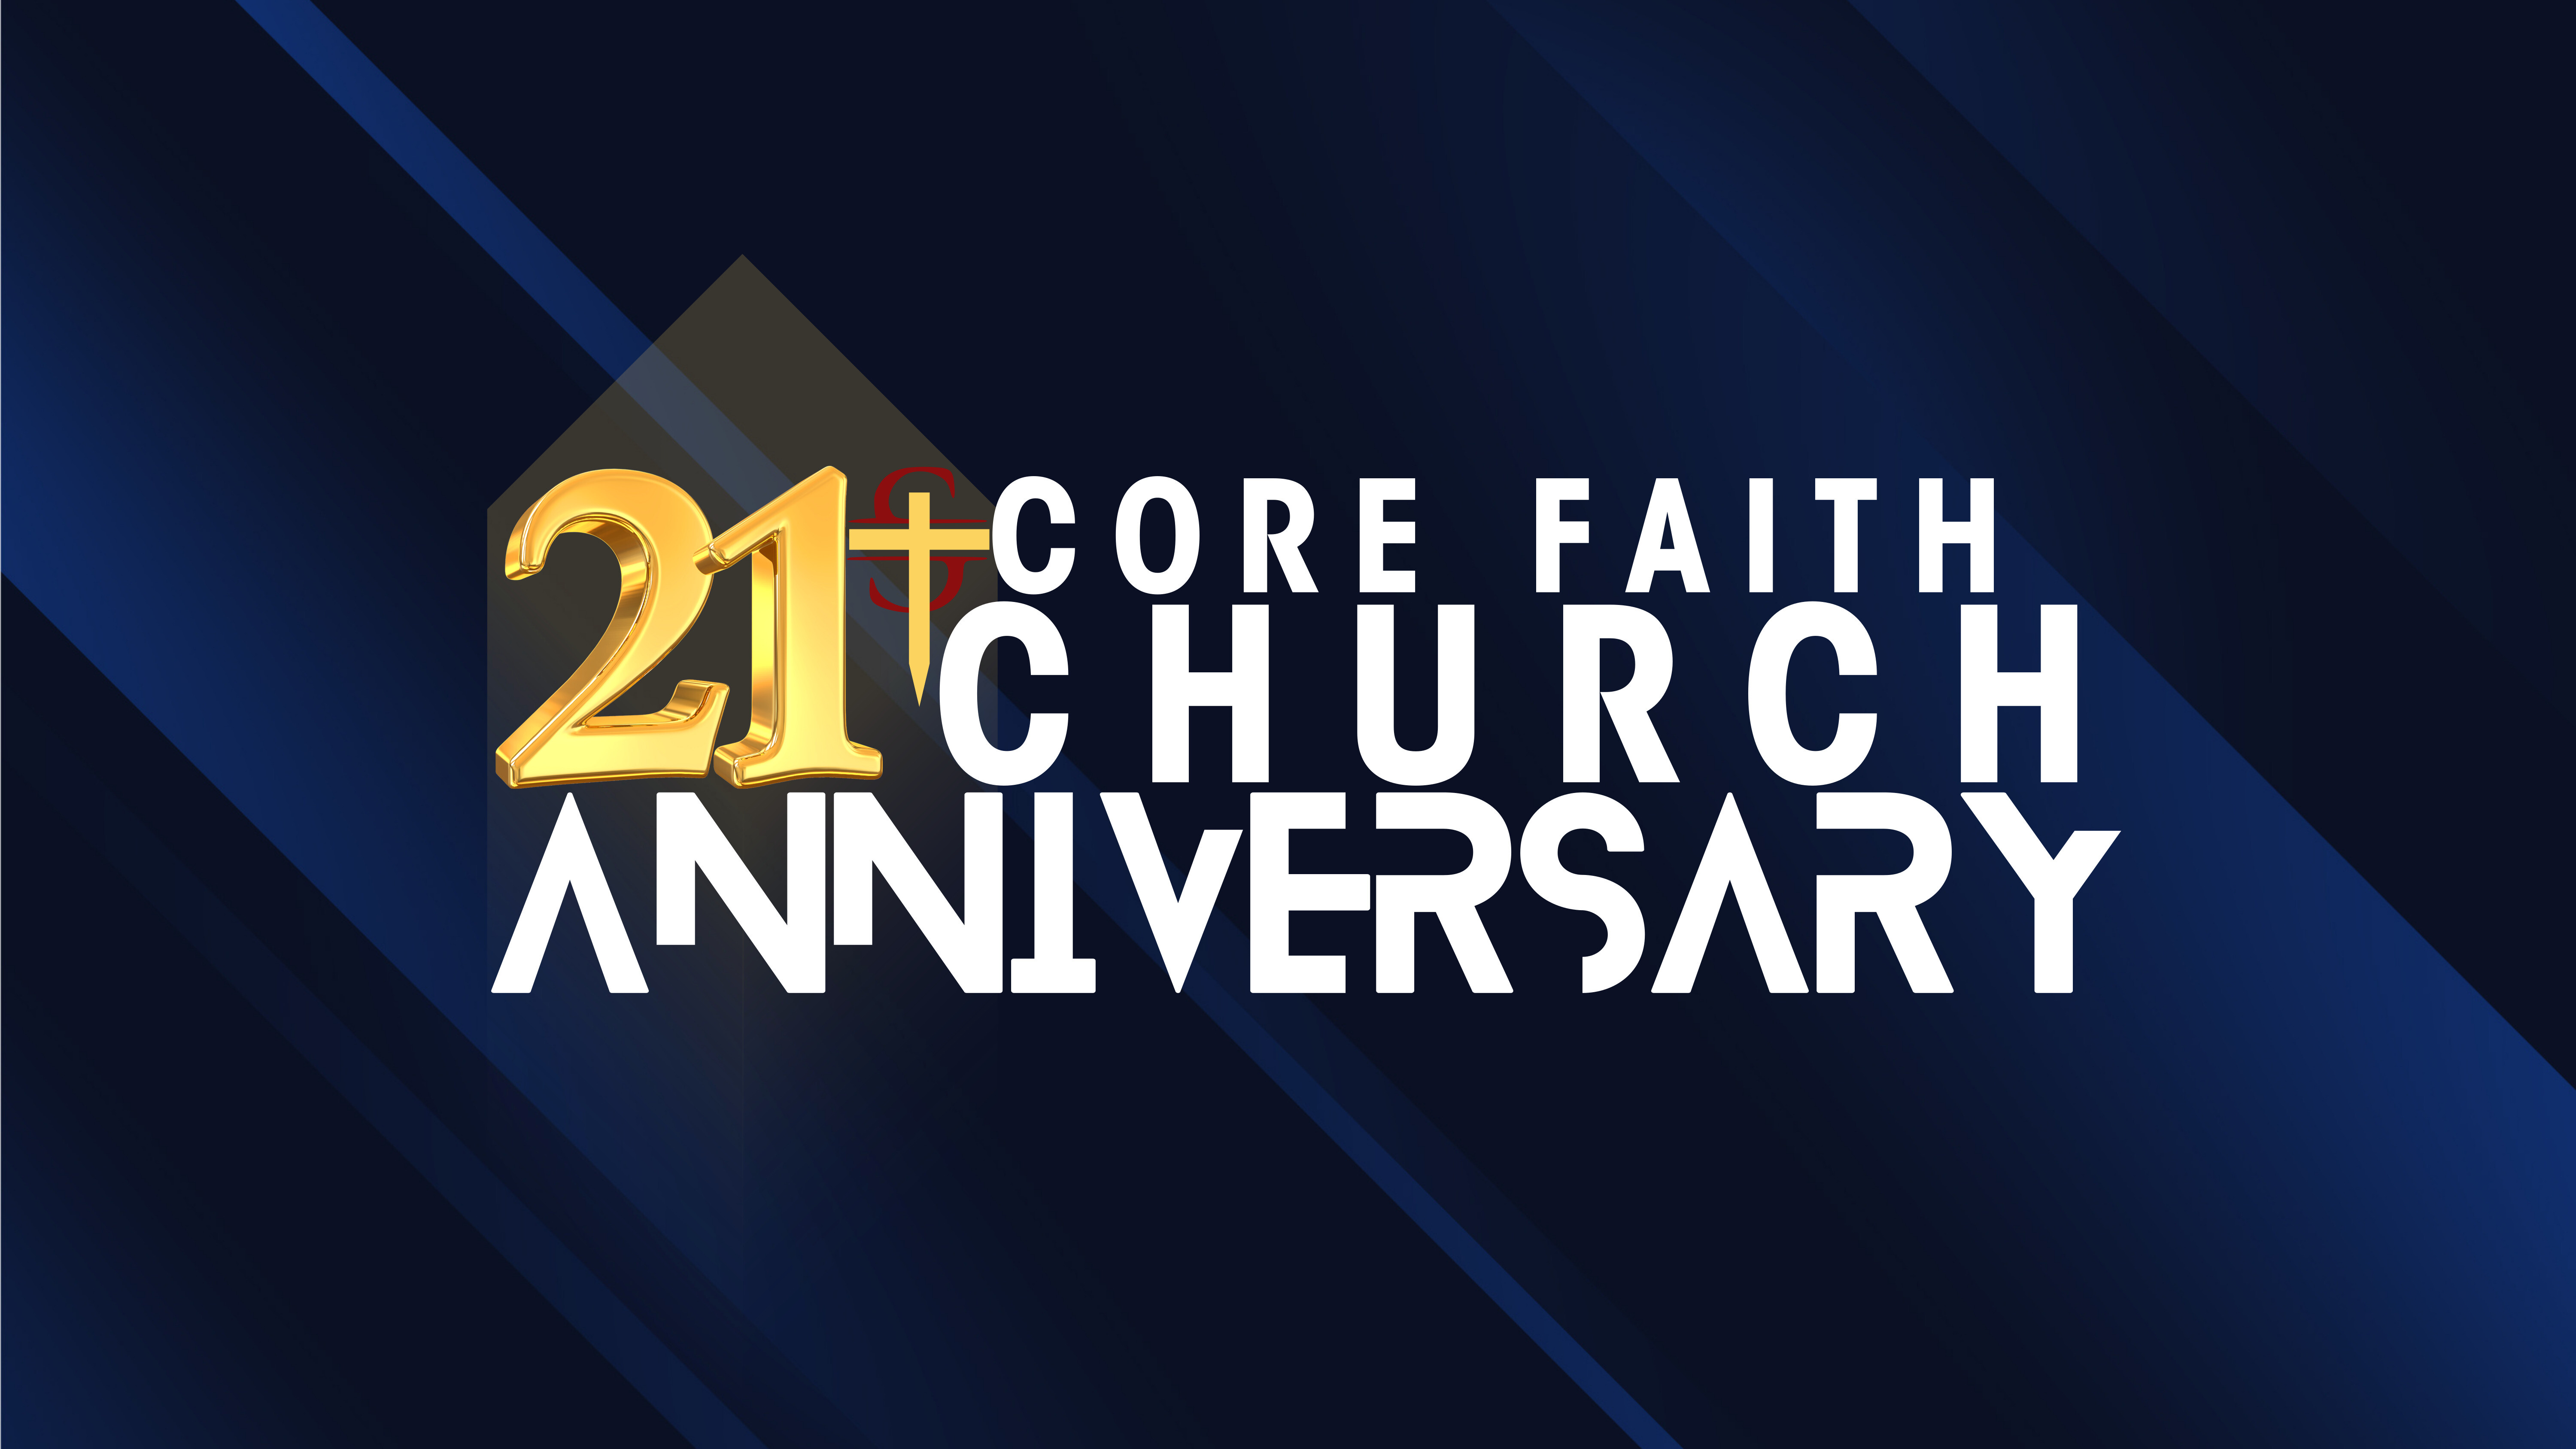 Core Faith Church | Celebrating 21 Years